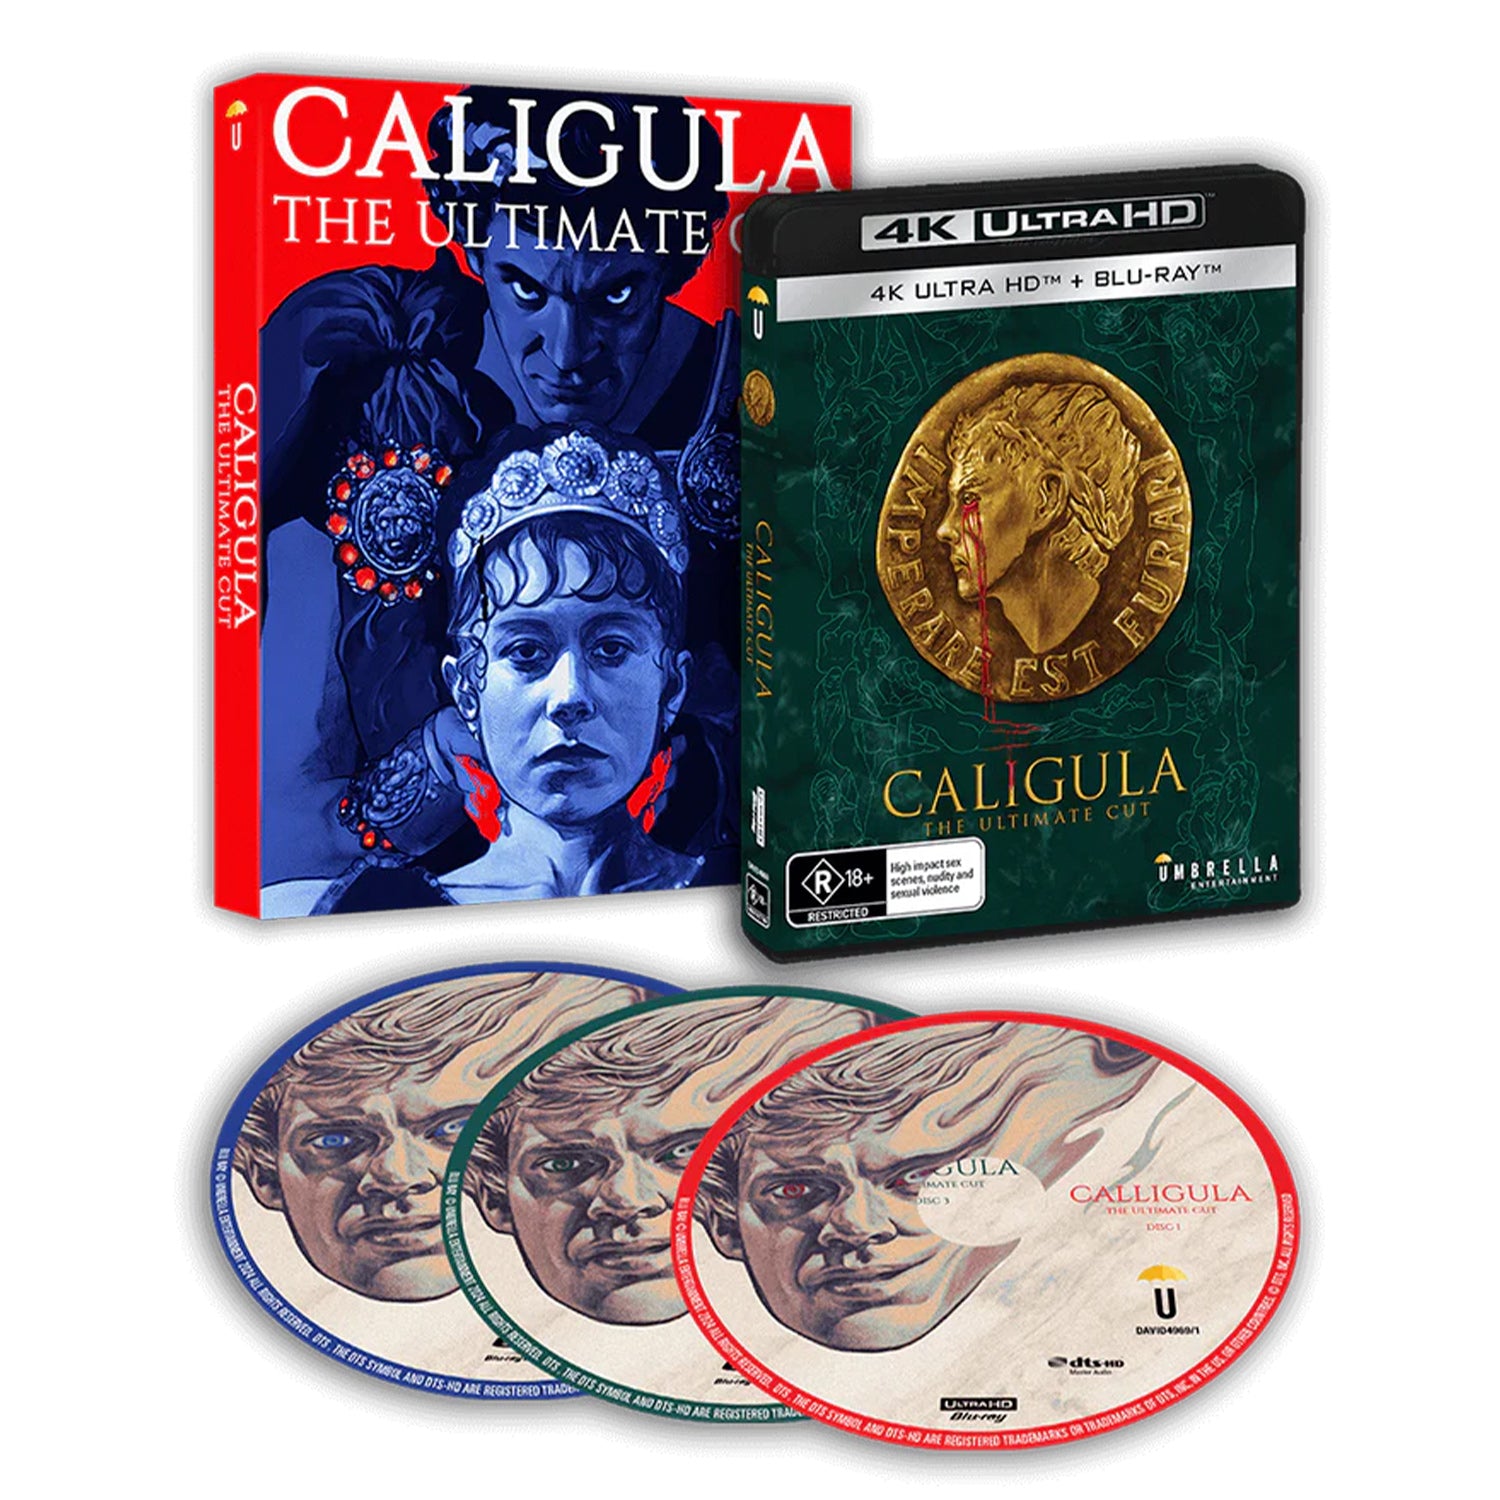 Калигула [Окончательная полная версия] (англ. язык) (4K + 2 Blu-ray + 2 Books + Magazine + Rigid case + Slipcase + 2 Posters + Artcards) ABSOLUTE POWER Collector's Edition